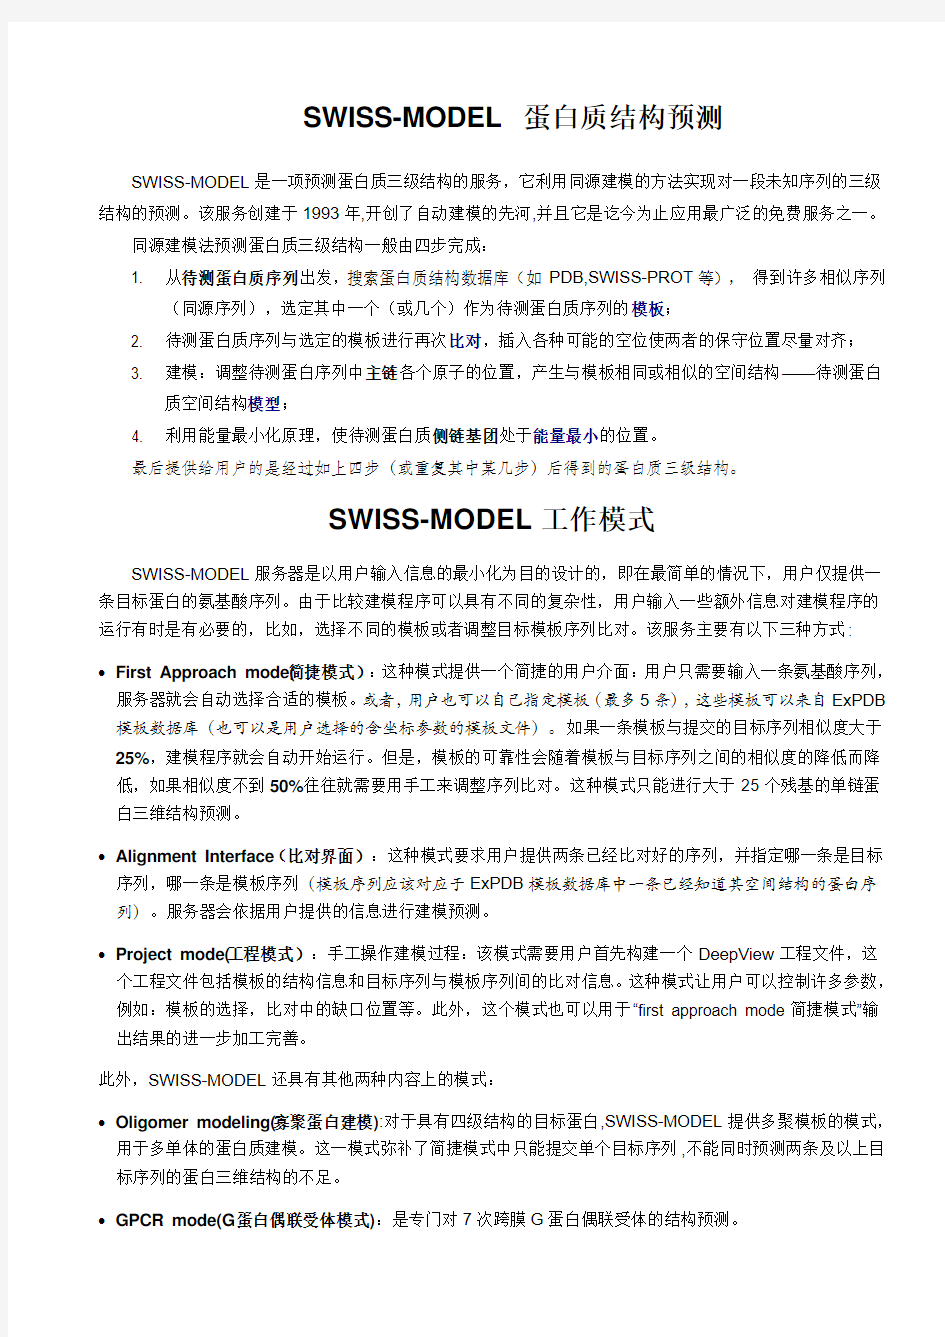 SWISS-MODEL_蛋白质结构预测教程